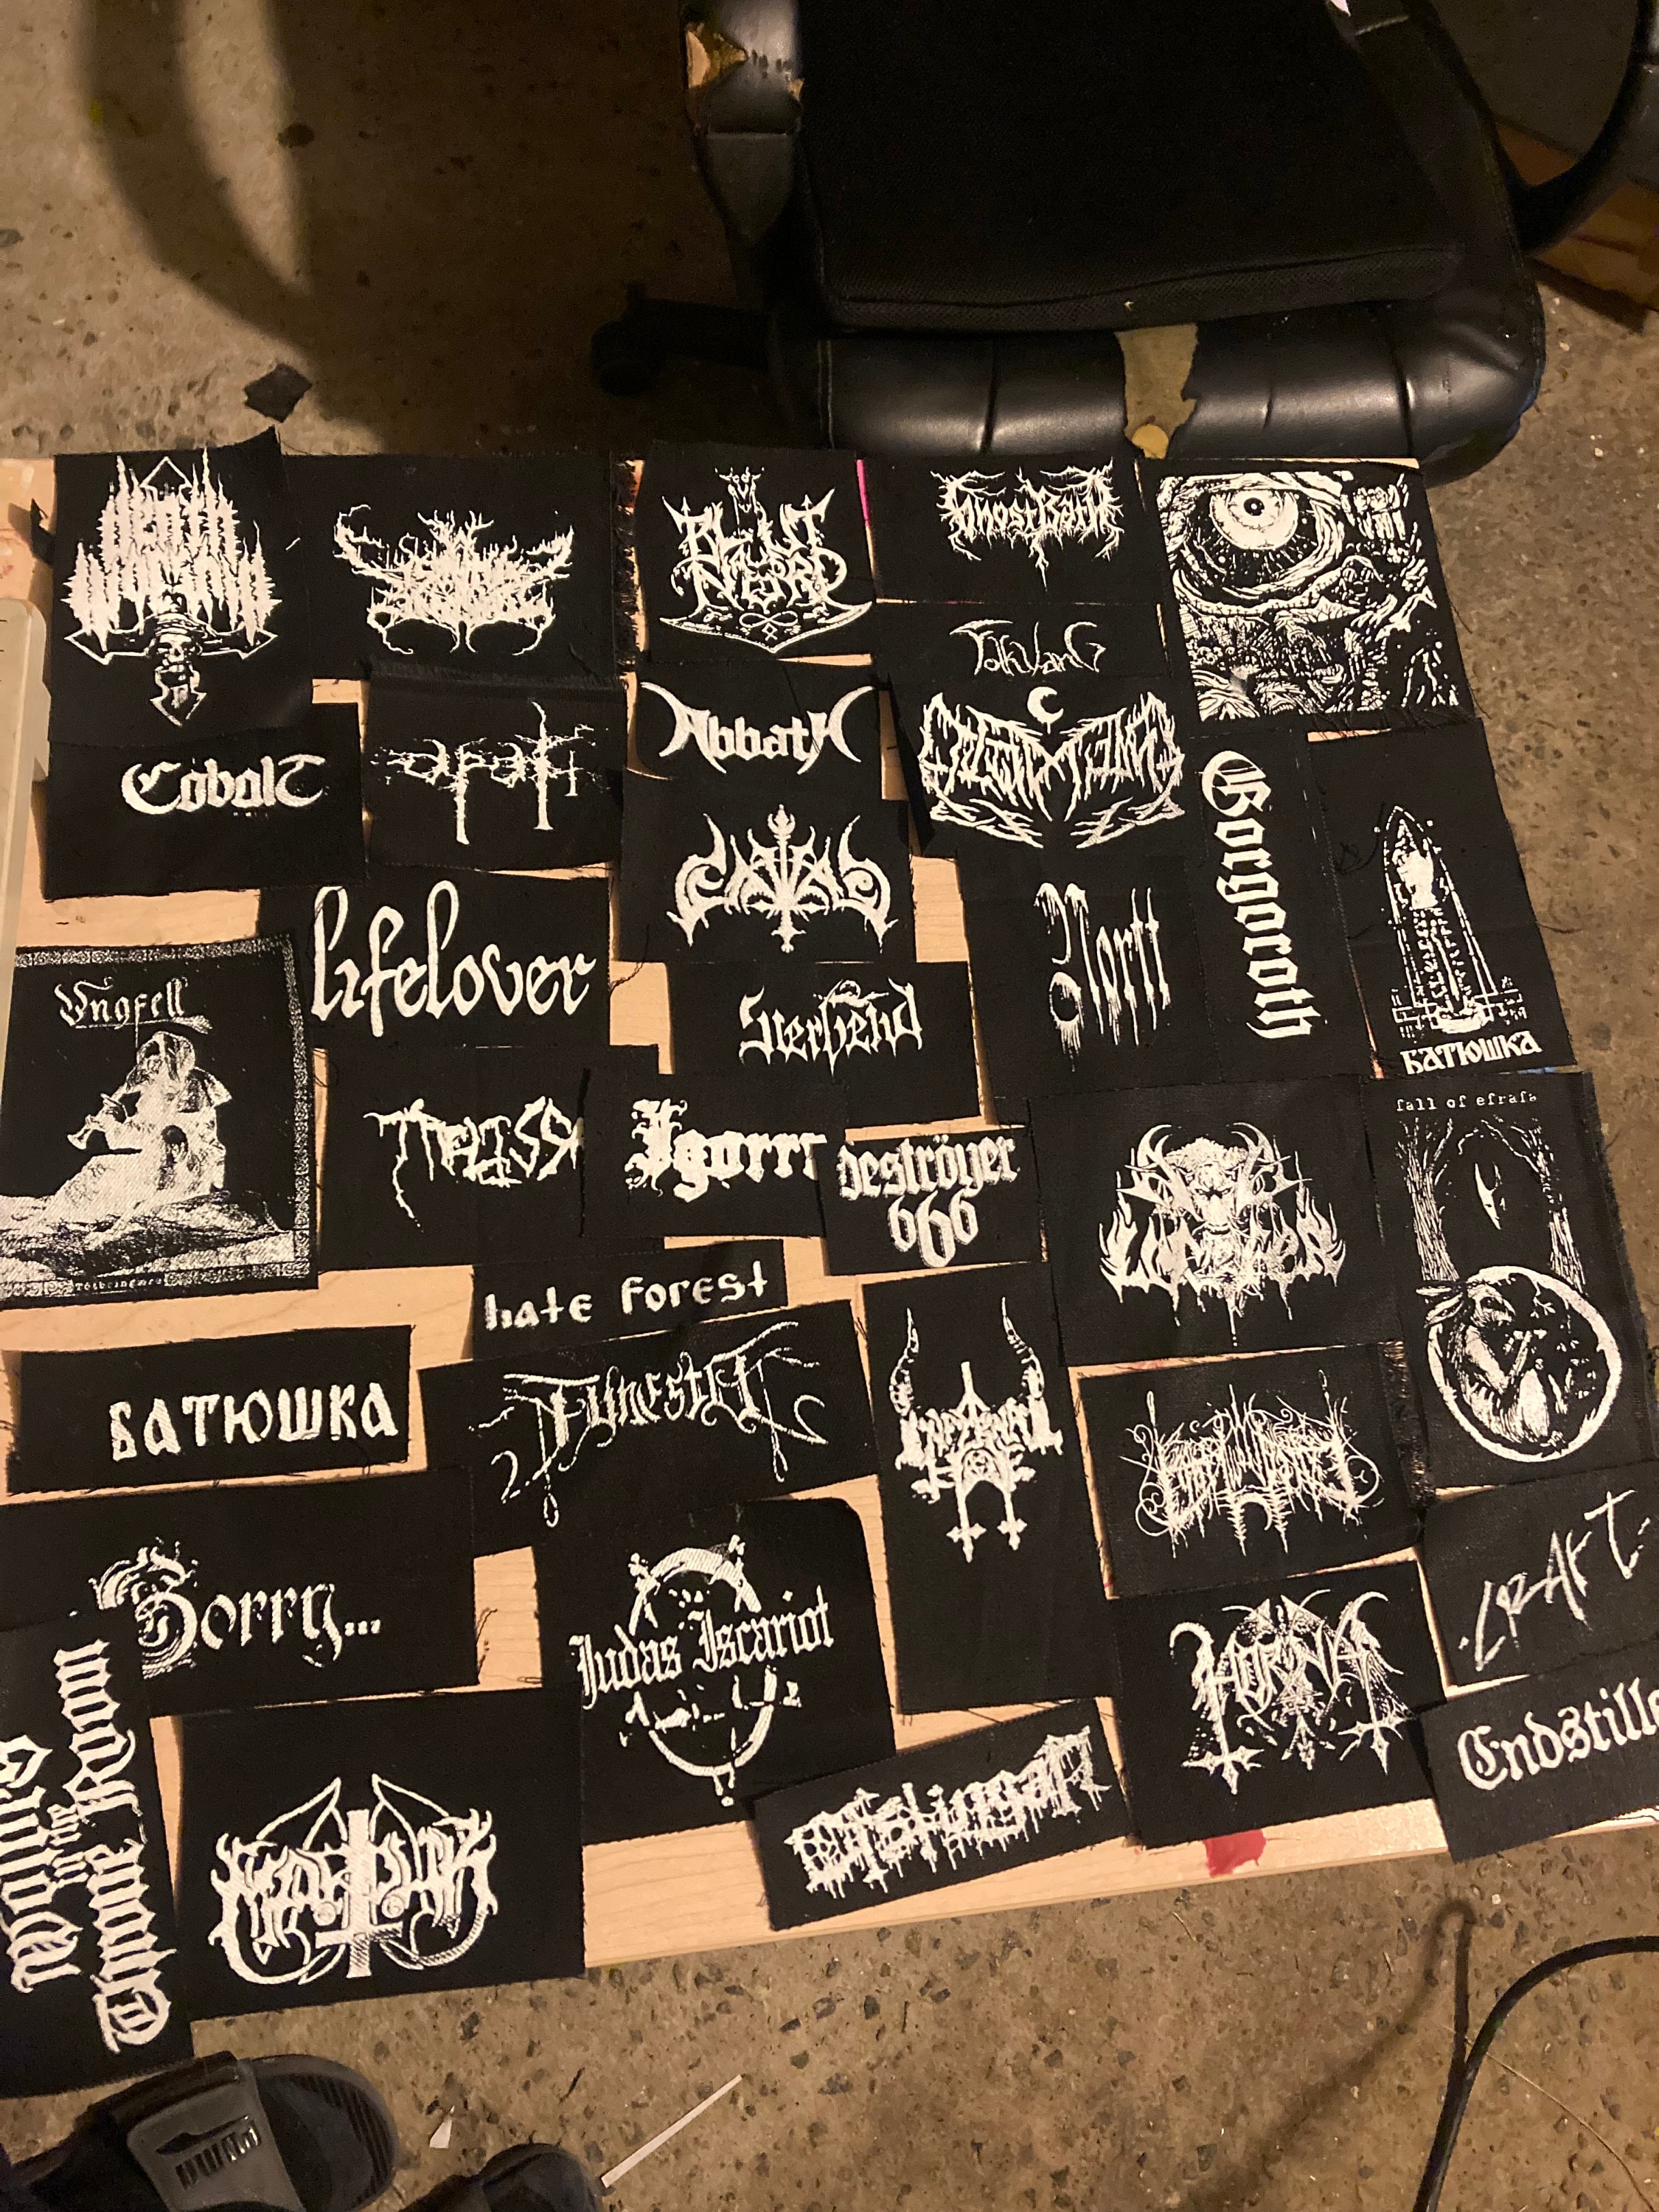 Unblack Metal / White Metal Vinyl Sticker Lot (10 Pack) black